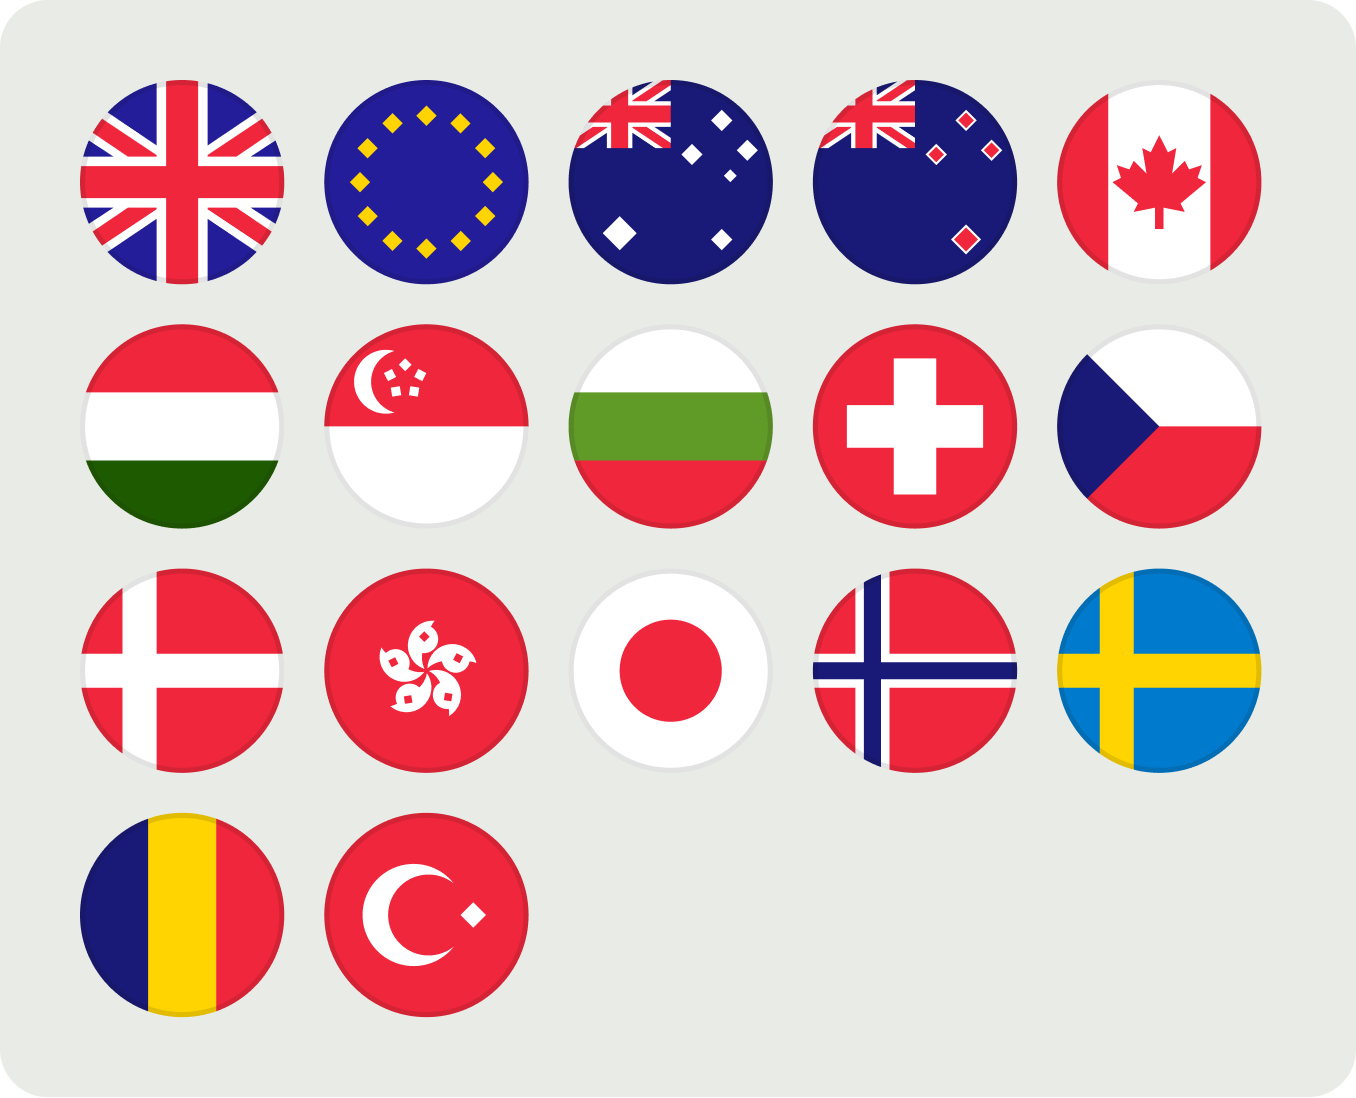 Round representations of the flags of: UK, Europe, Australia, New Zealand, Canada, Hungary, Singapore, Switzerland, Czechia, Denmark, Hong Kong, Japan, Norway, Sweden, Romania, Turkey